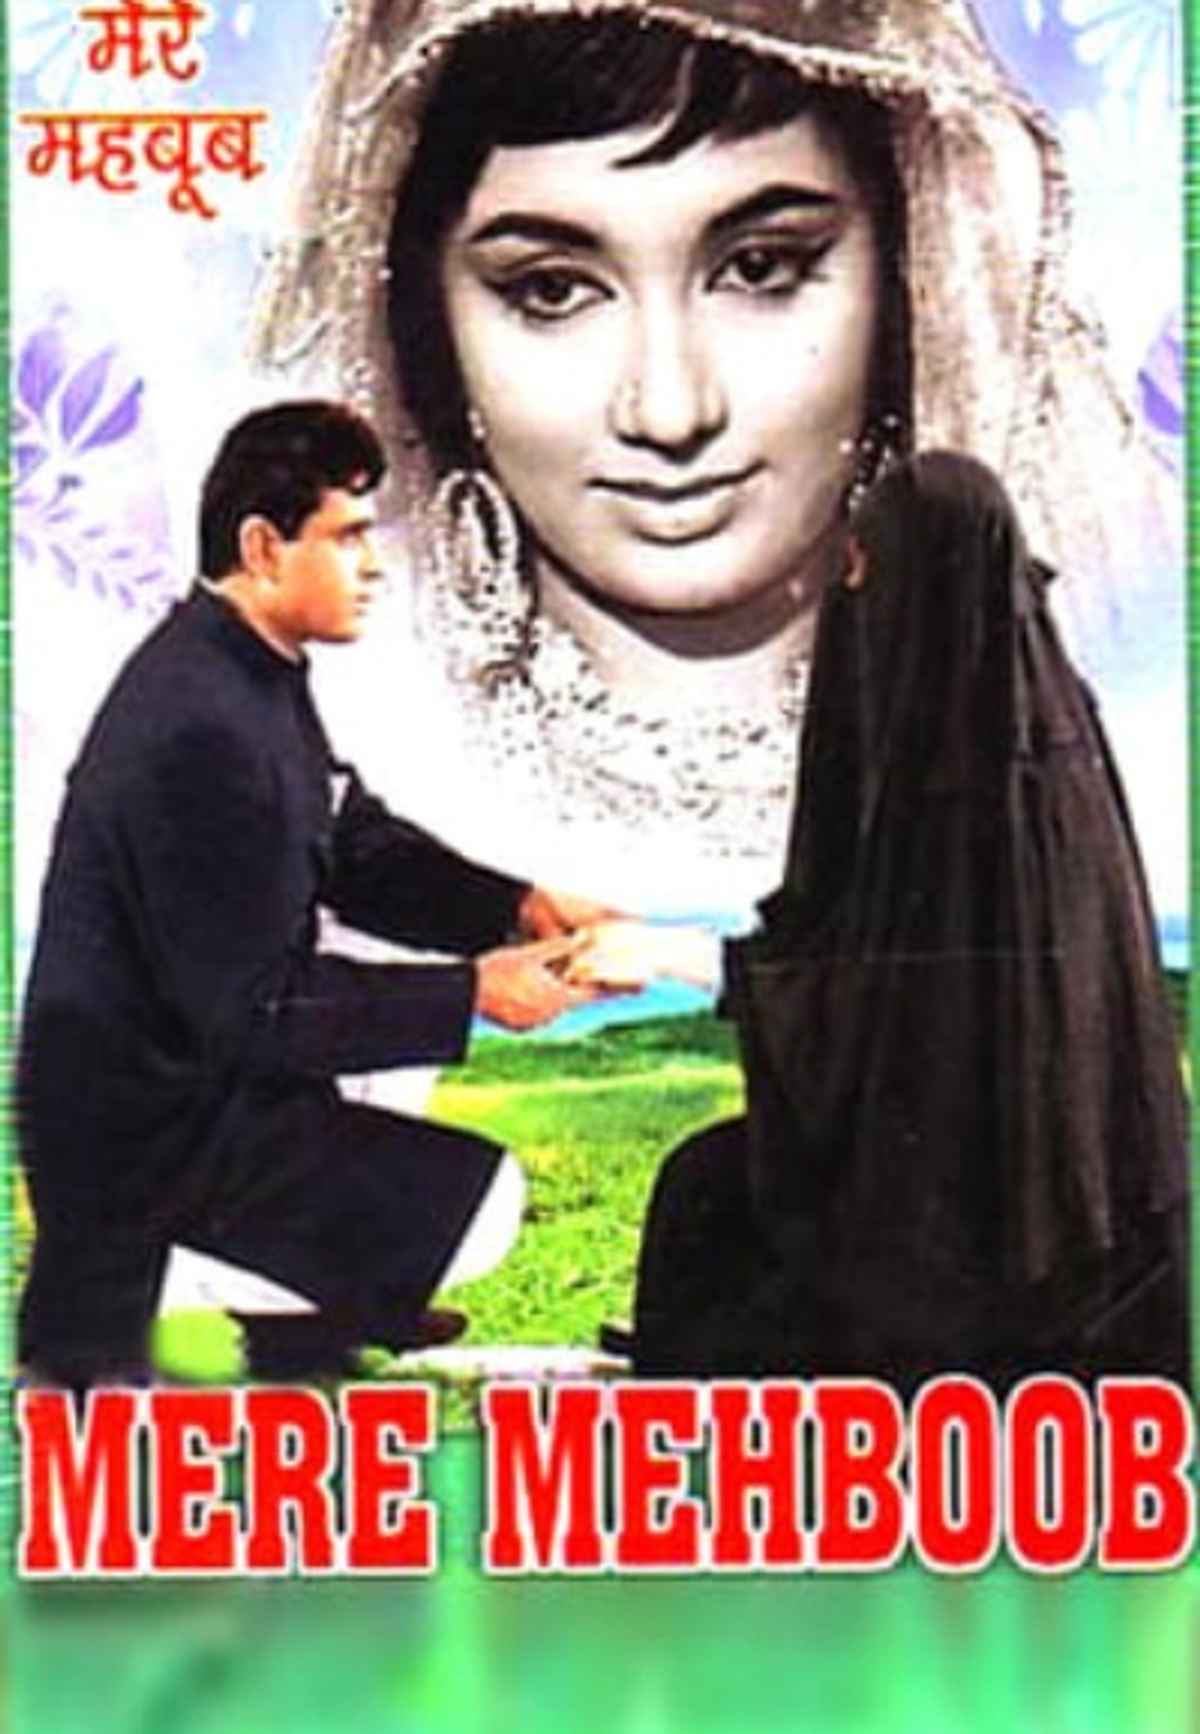 Mumtaz Begum Best Movies, TV Shows and Web Series List